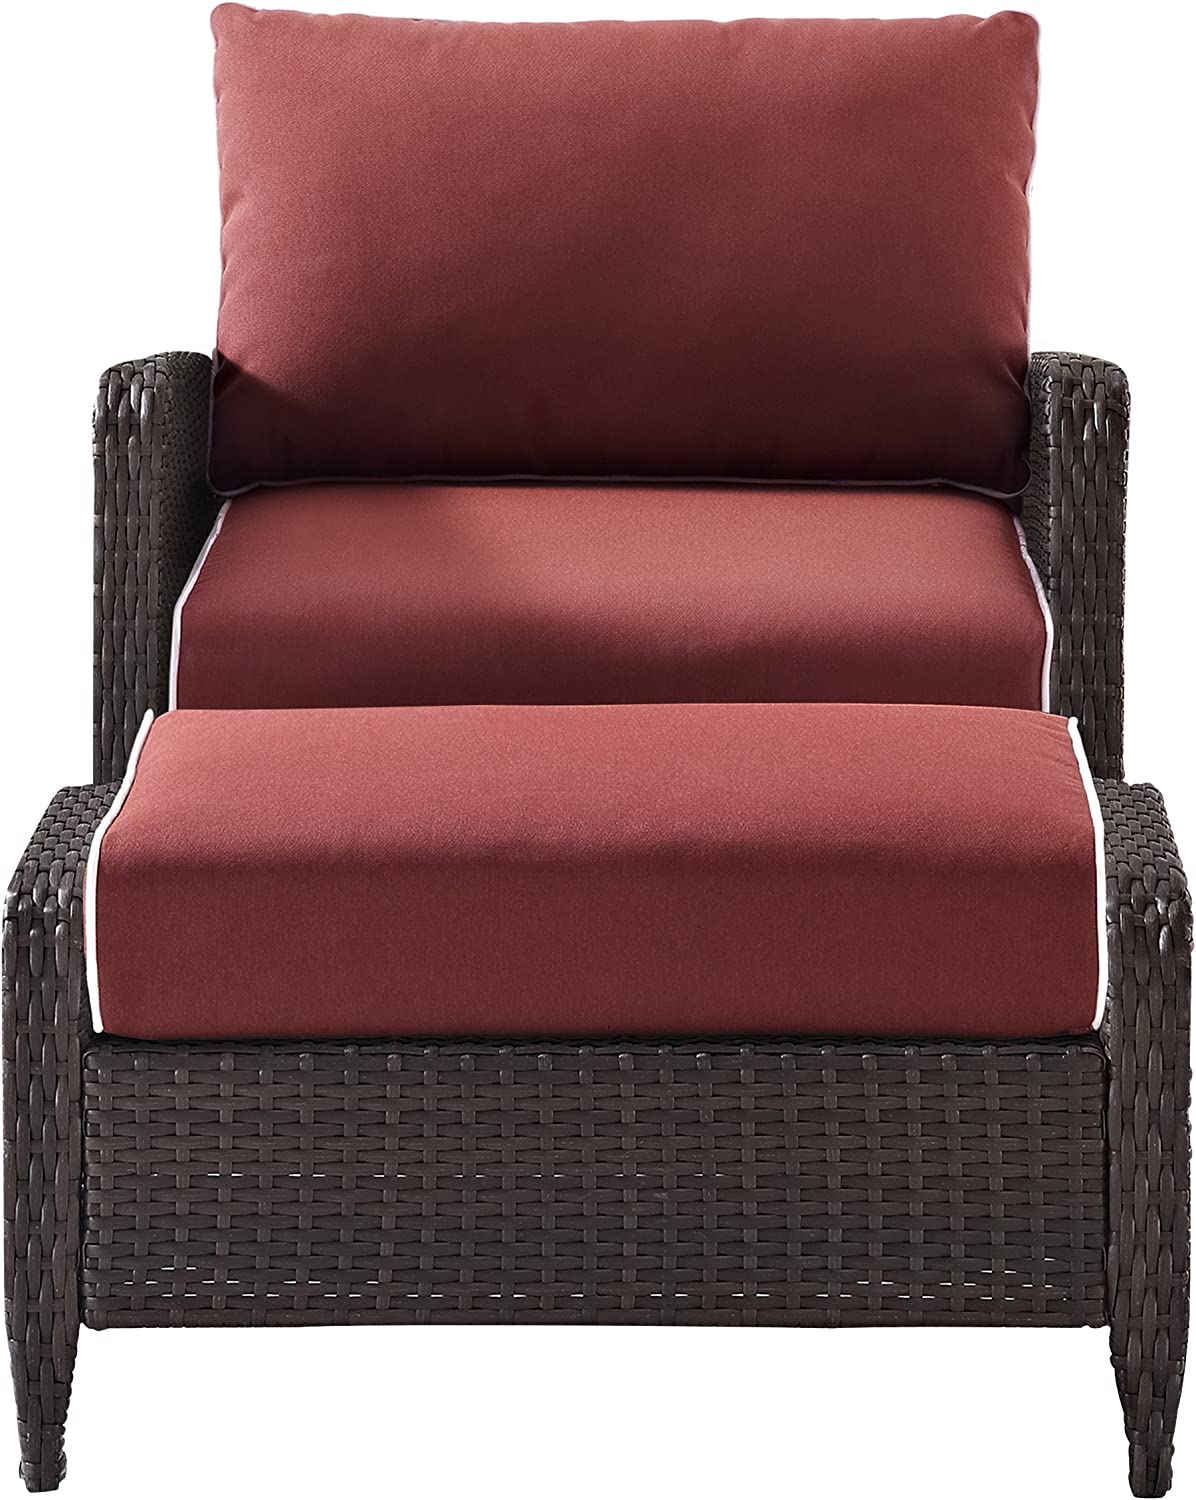 Kiawah 2Pc Outdoor Wicker Chair Set